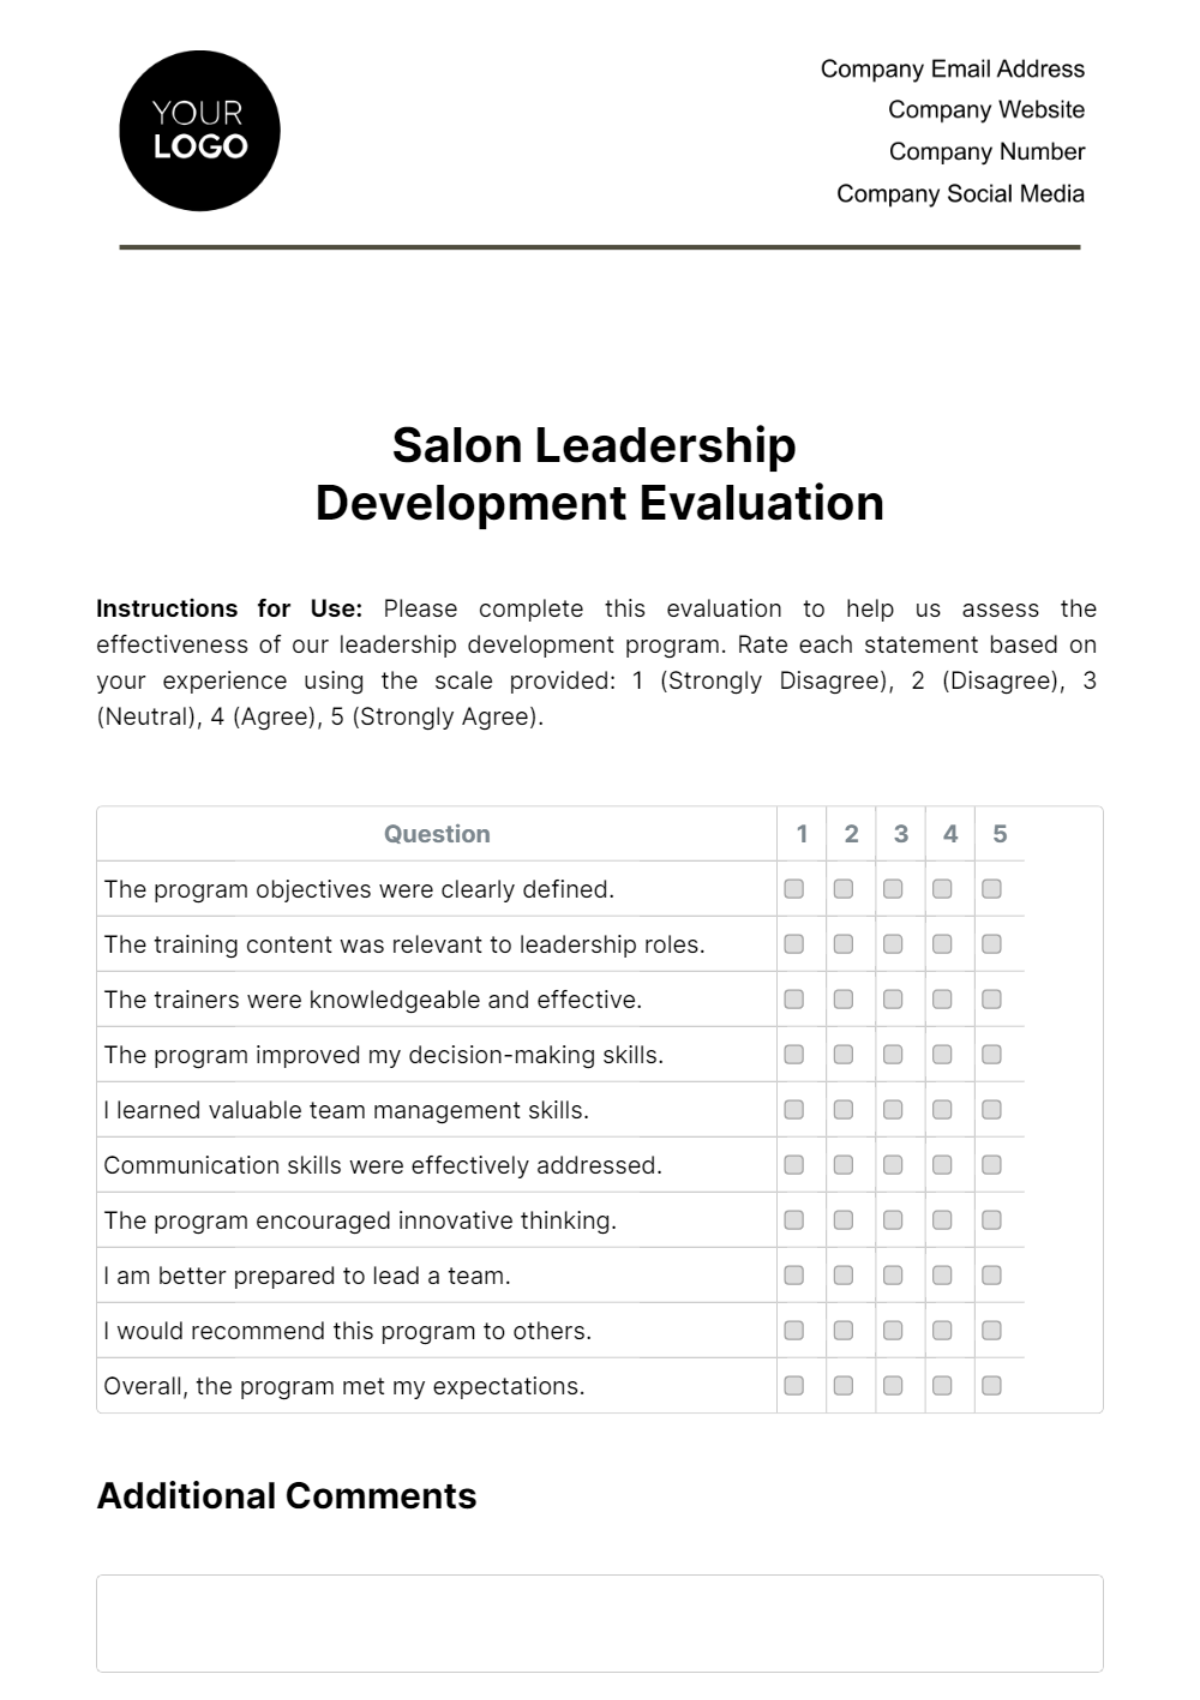 Salon Leadership Development Evaluation Template